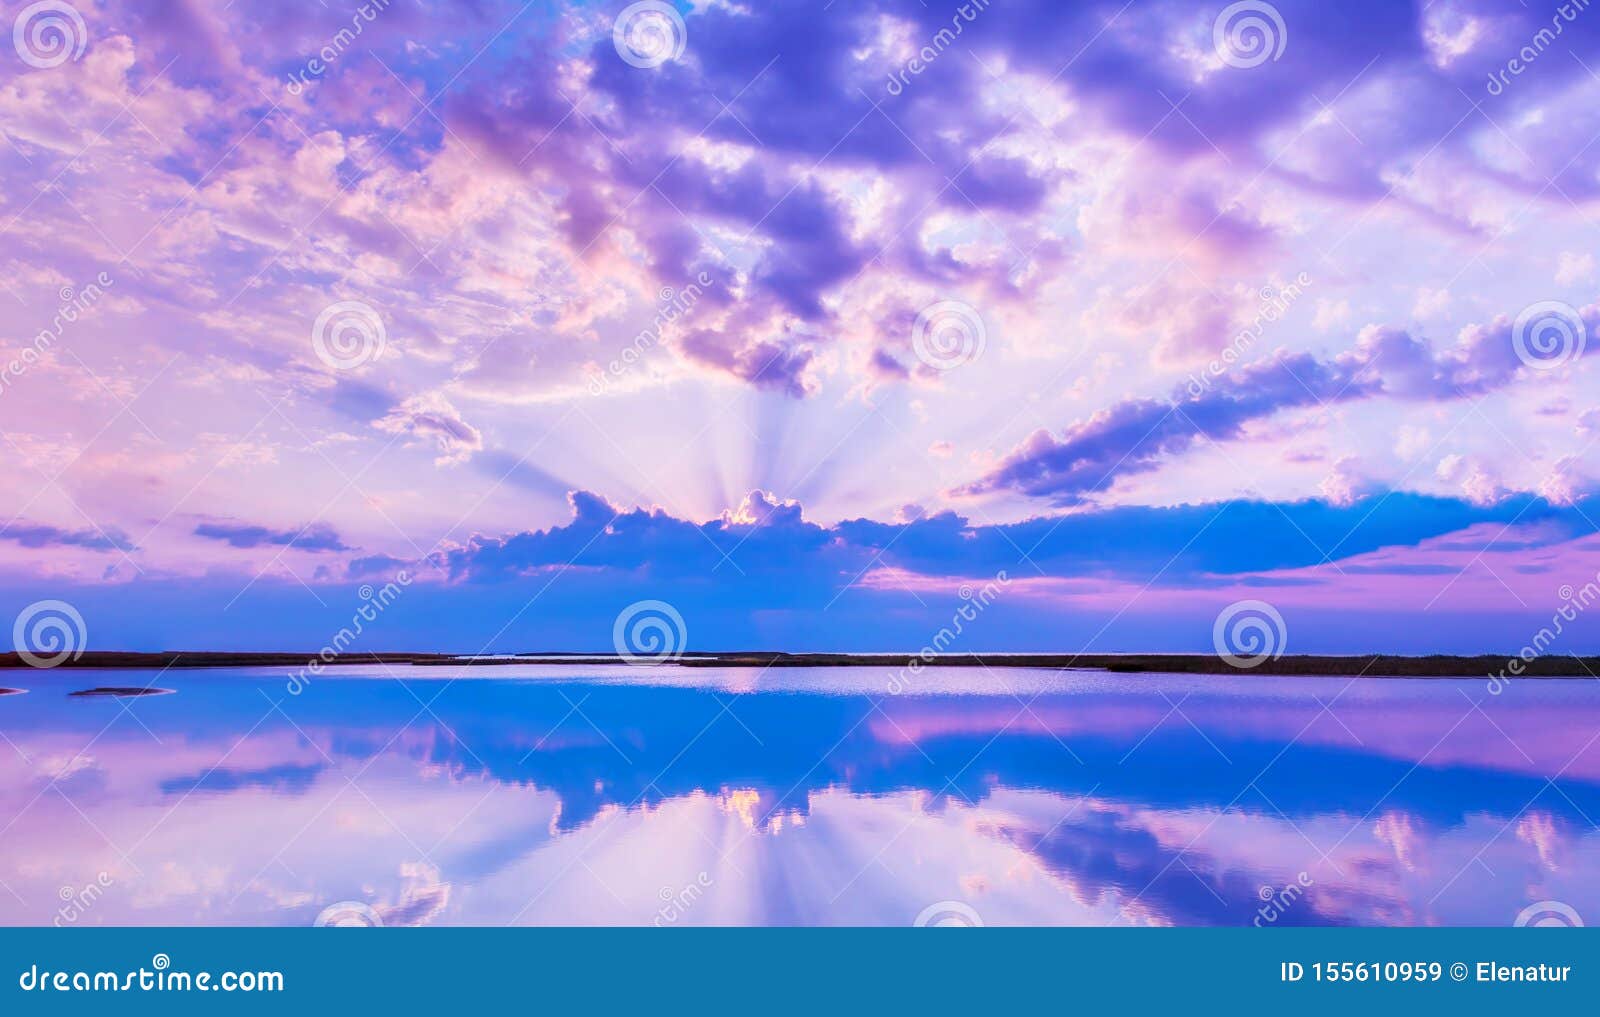 Beautiful Scenery with Colorful Sky, Beautiful Water ...